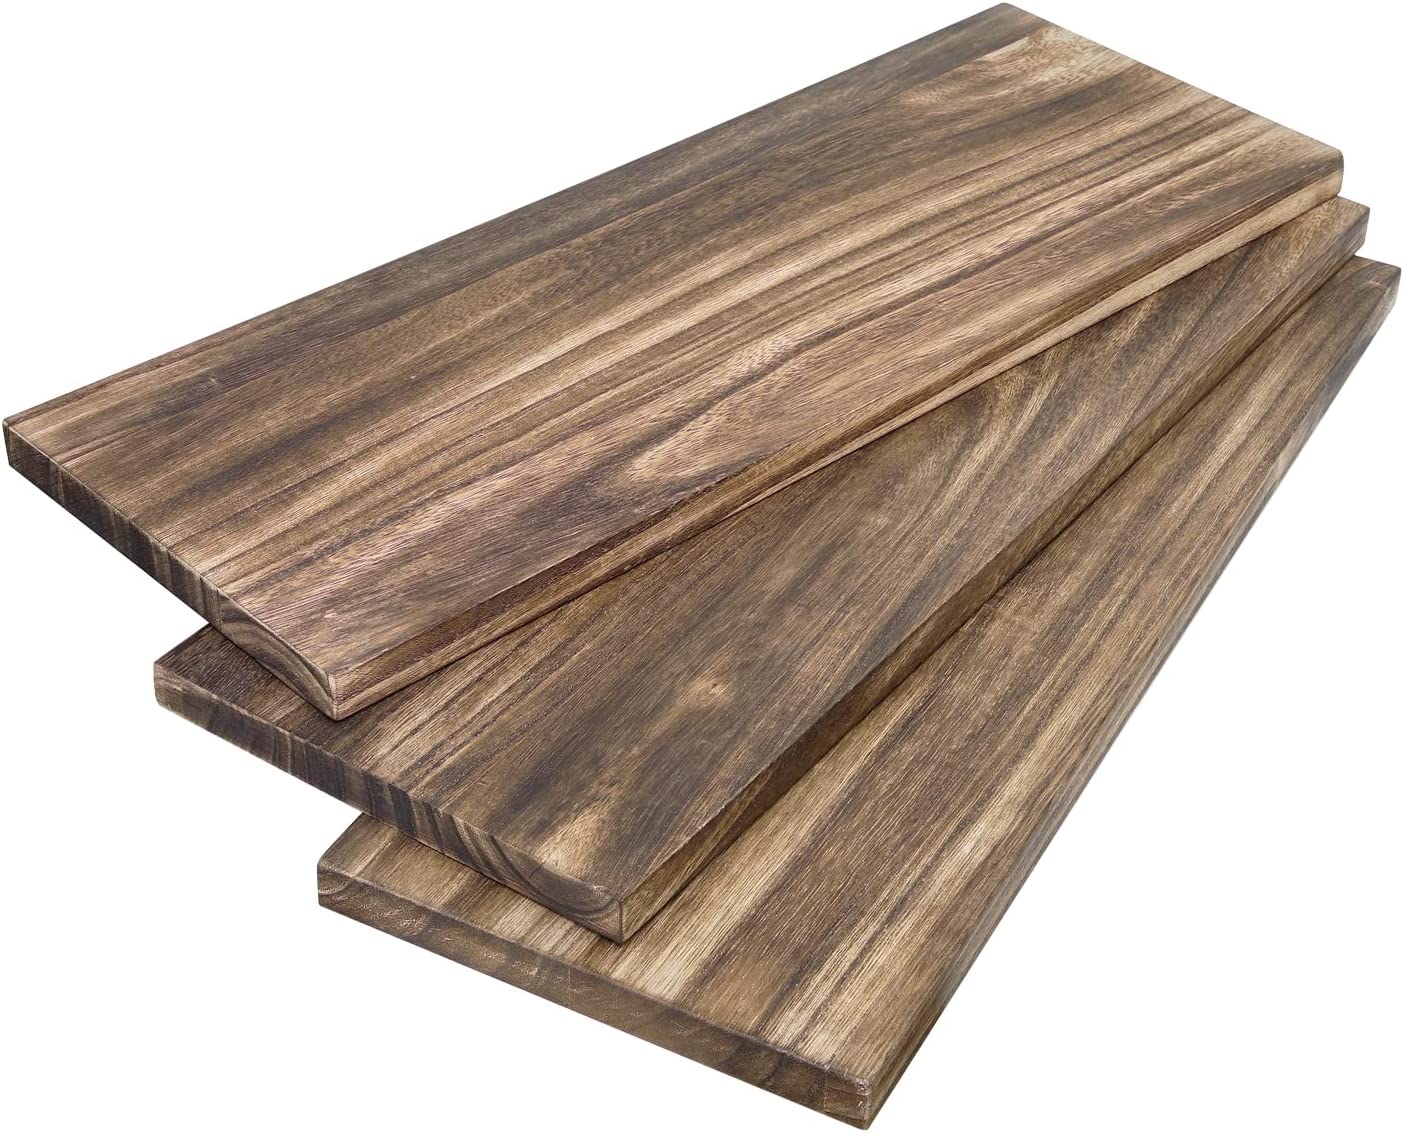 Charred Paulownia Wood Shou Sugi Ban for Making Floating Shelves and Home Decor